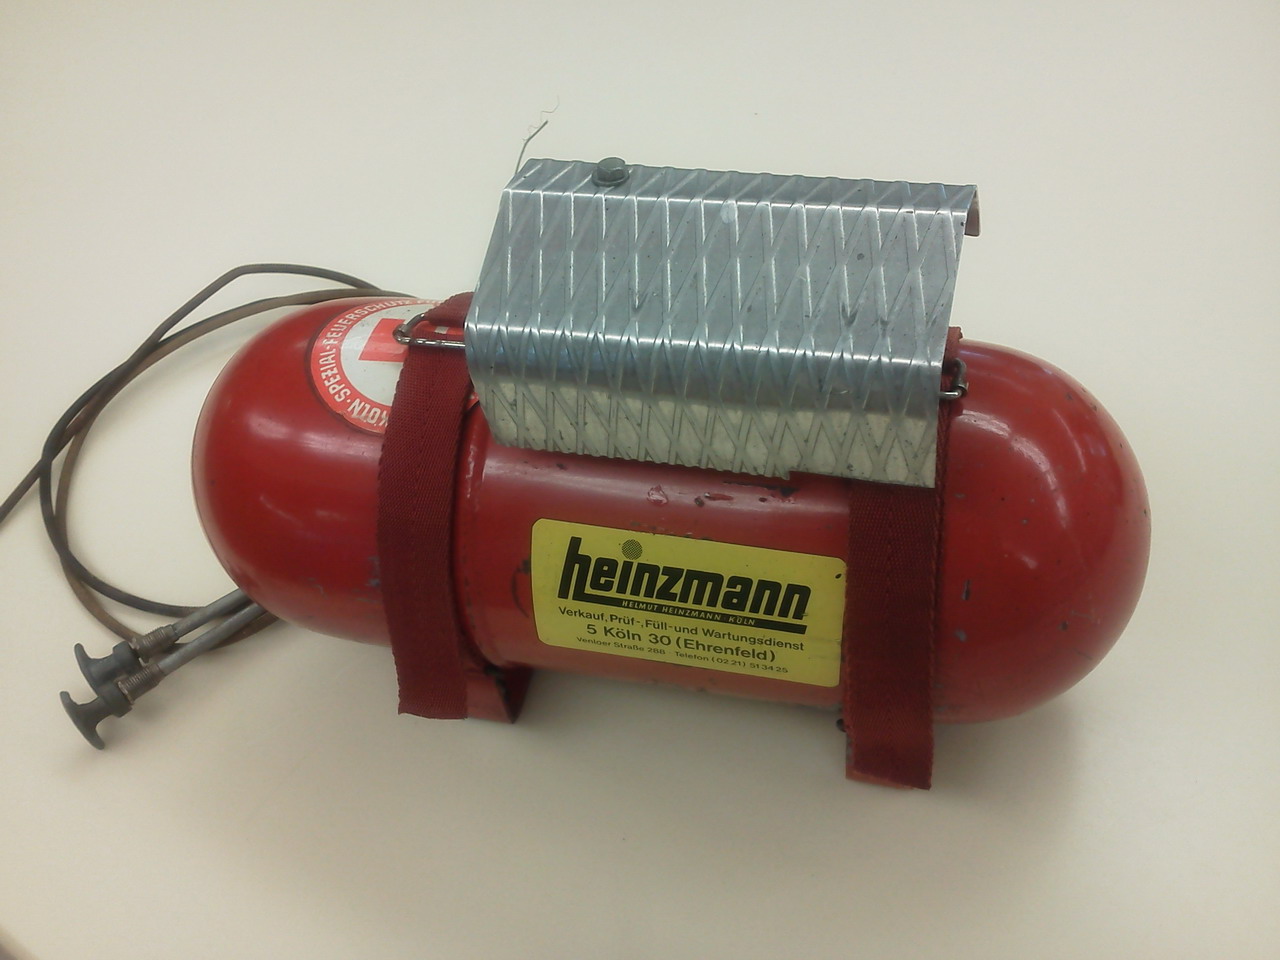 Heinzmann Fire Bottle System - Photo 1